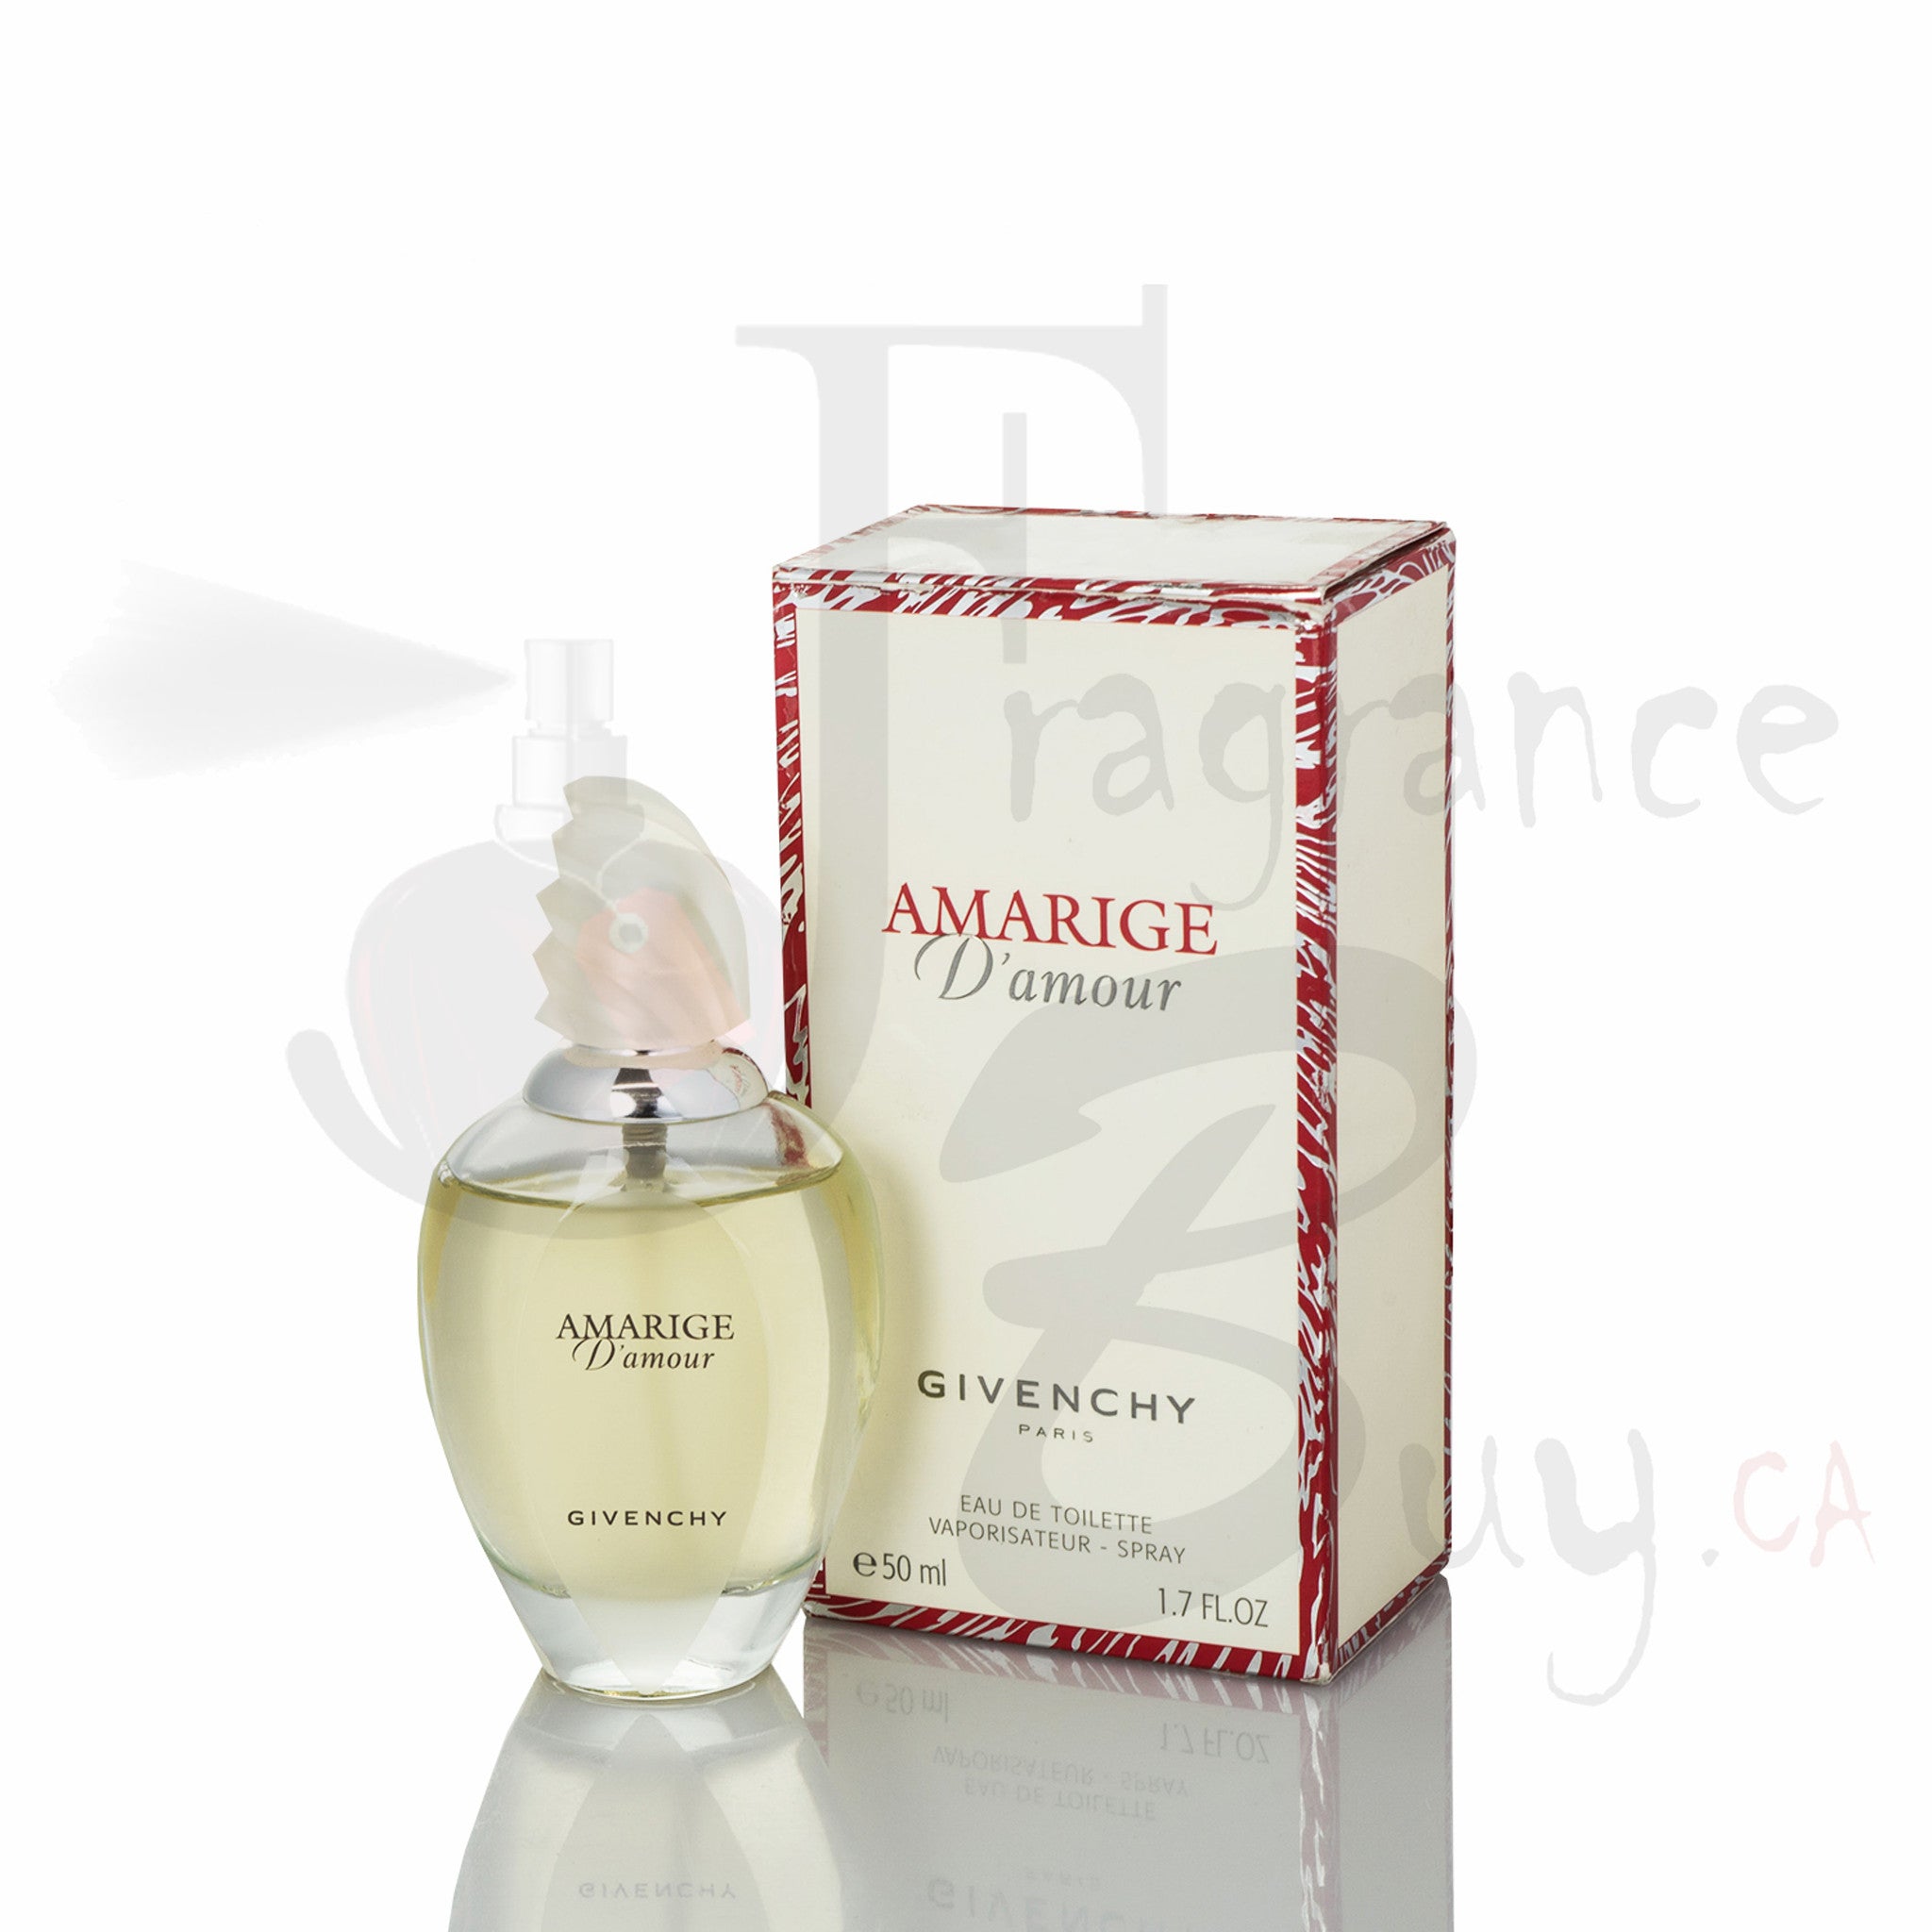 amarige perfume best price